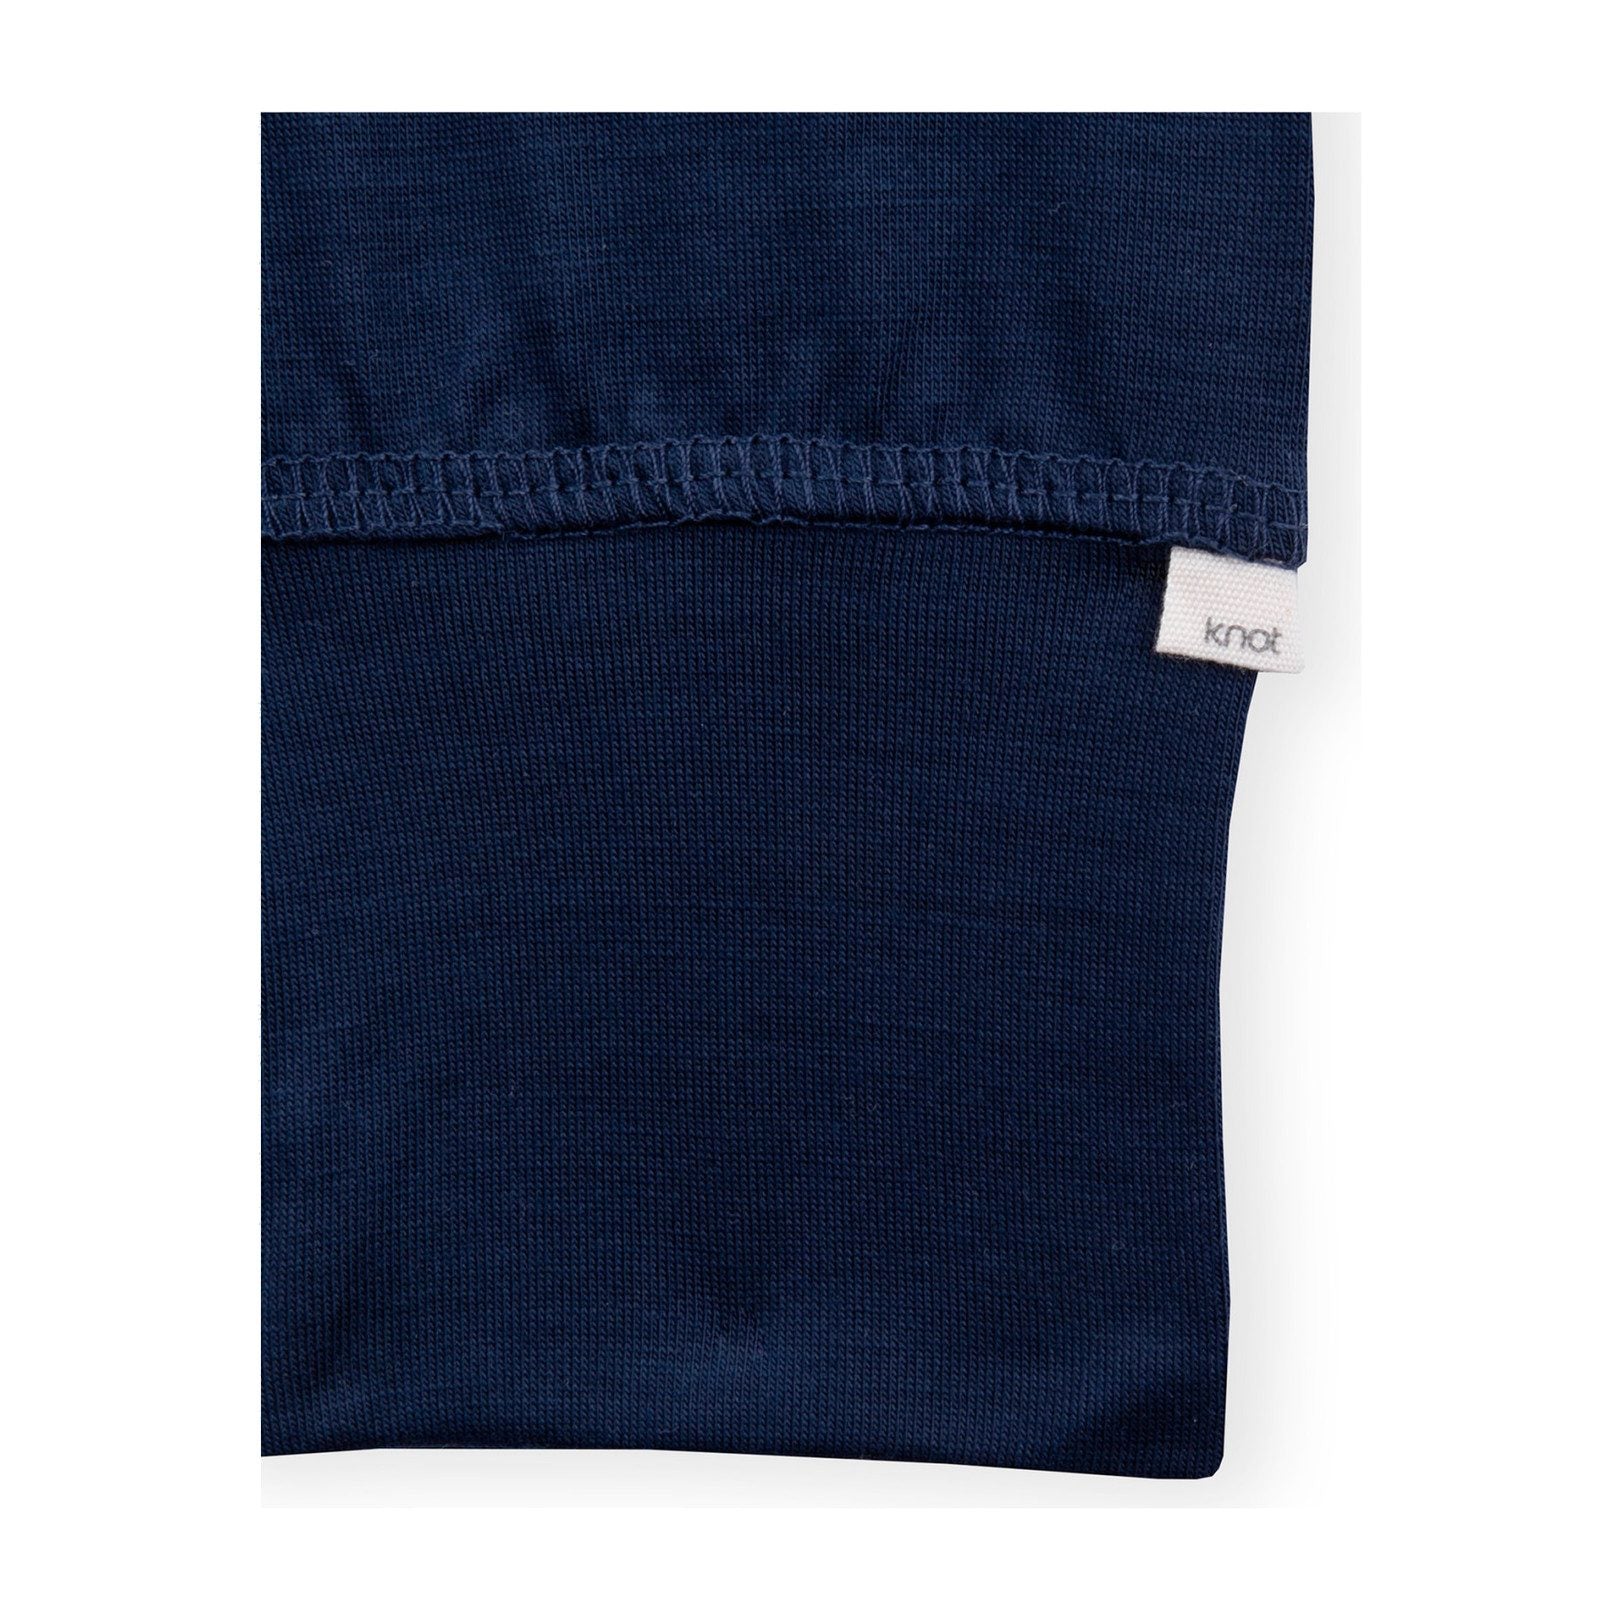 Essential Merino Lounge Pants - Knot x Antipodes Merino (Navy Blue)